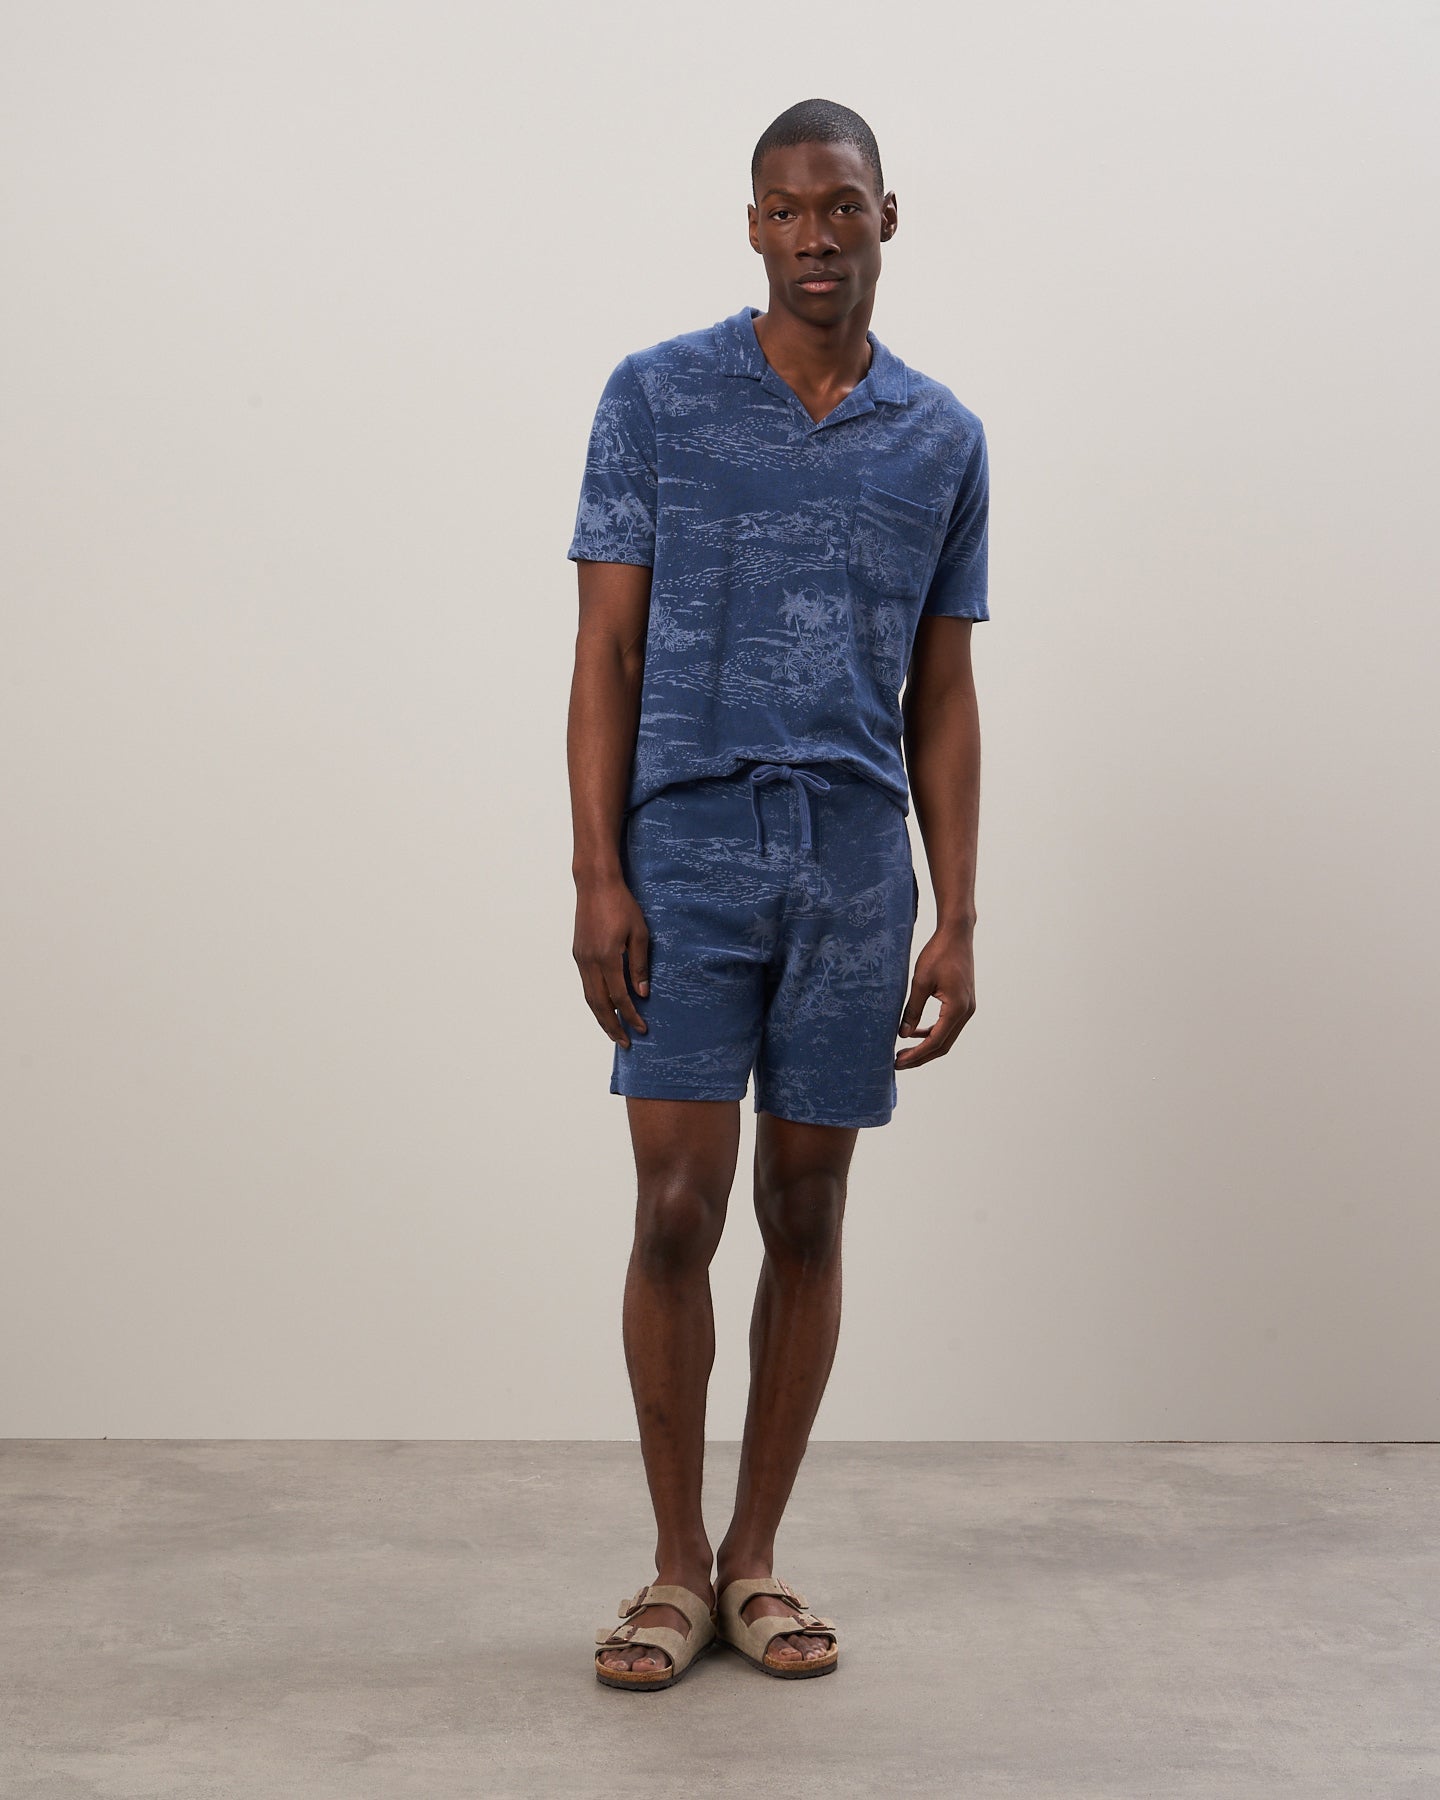 Short Homme en coton éponge imprimé Hawaïi Bleu cobalt BBP7312-01